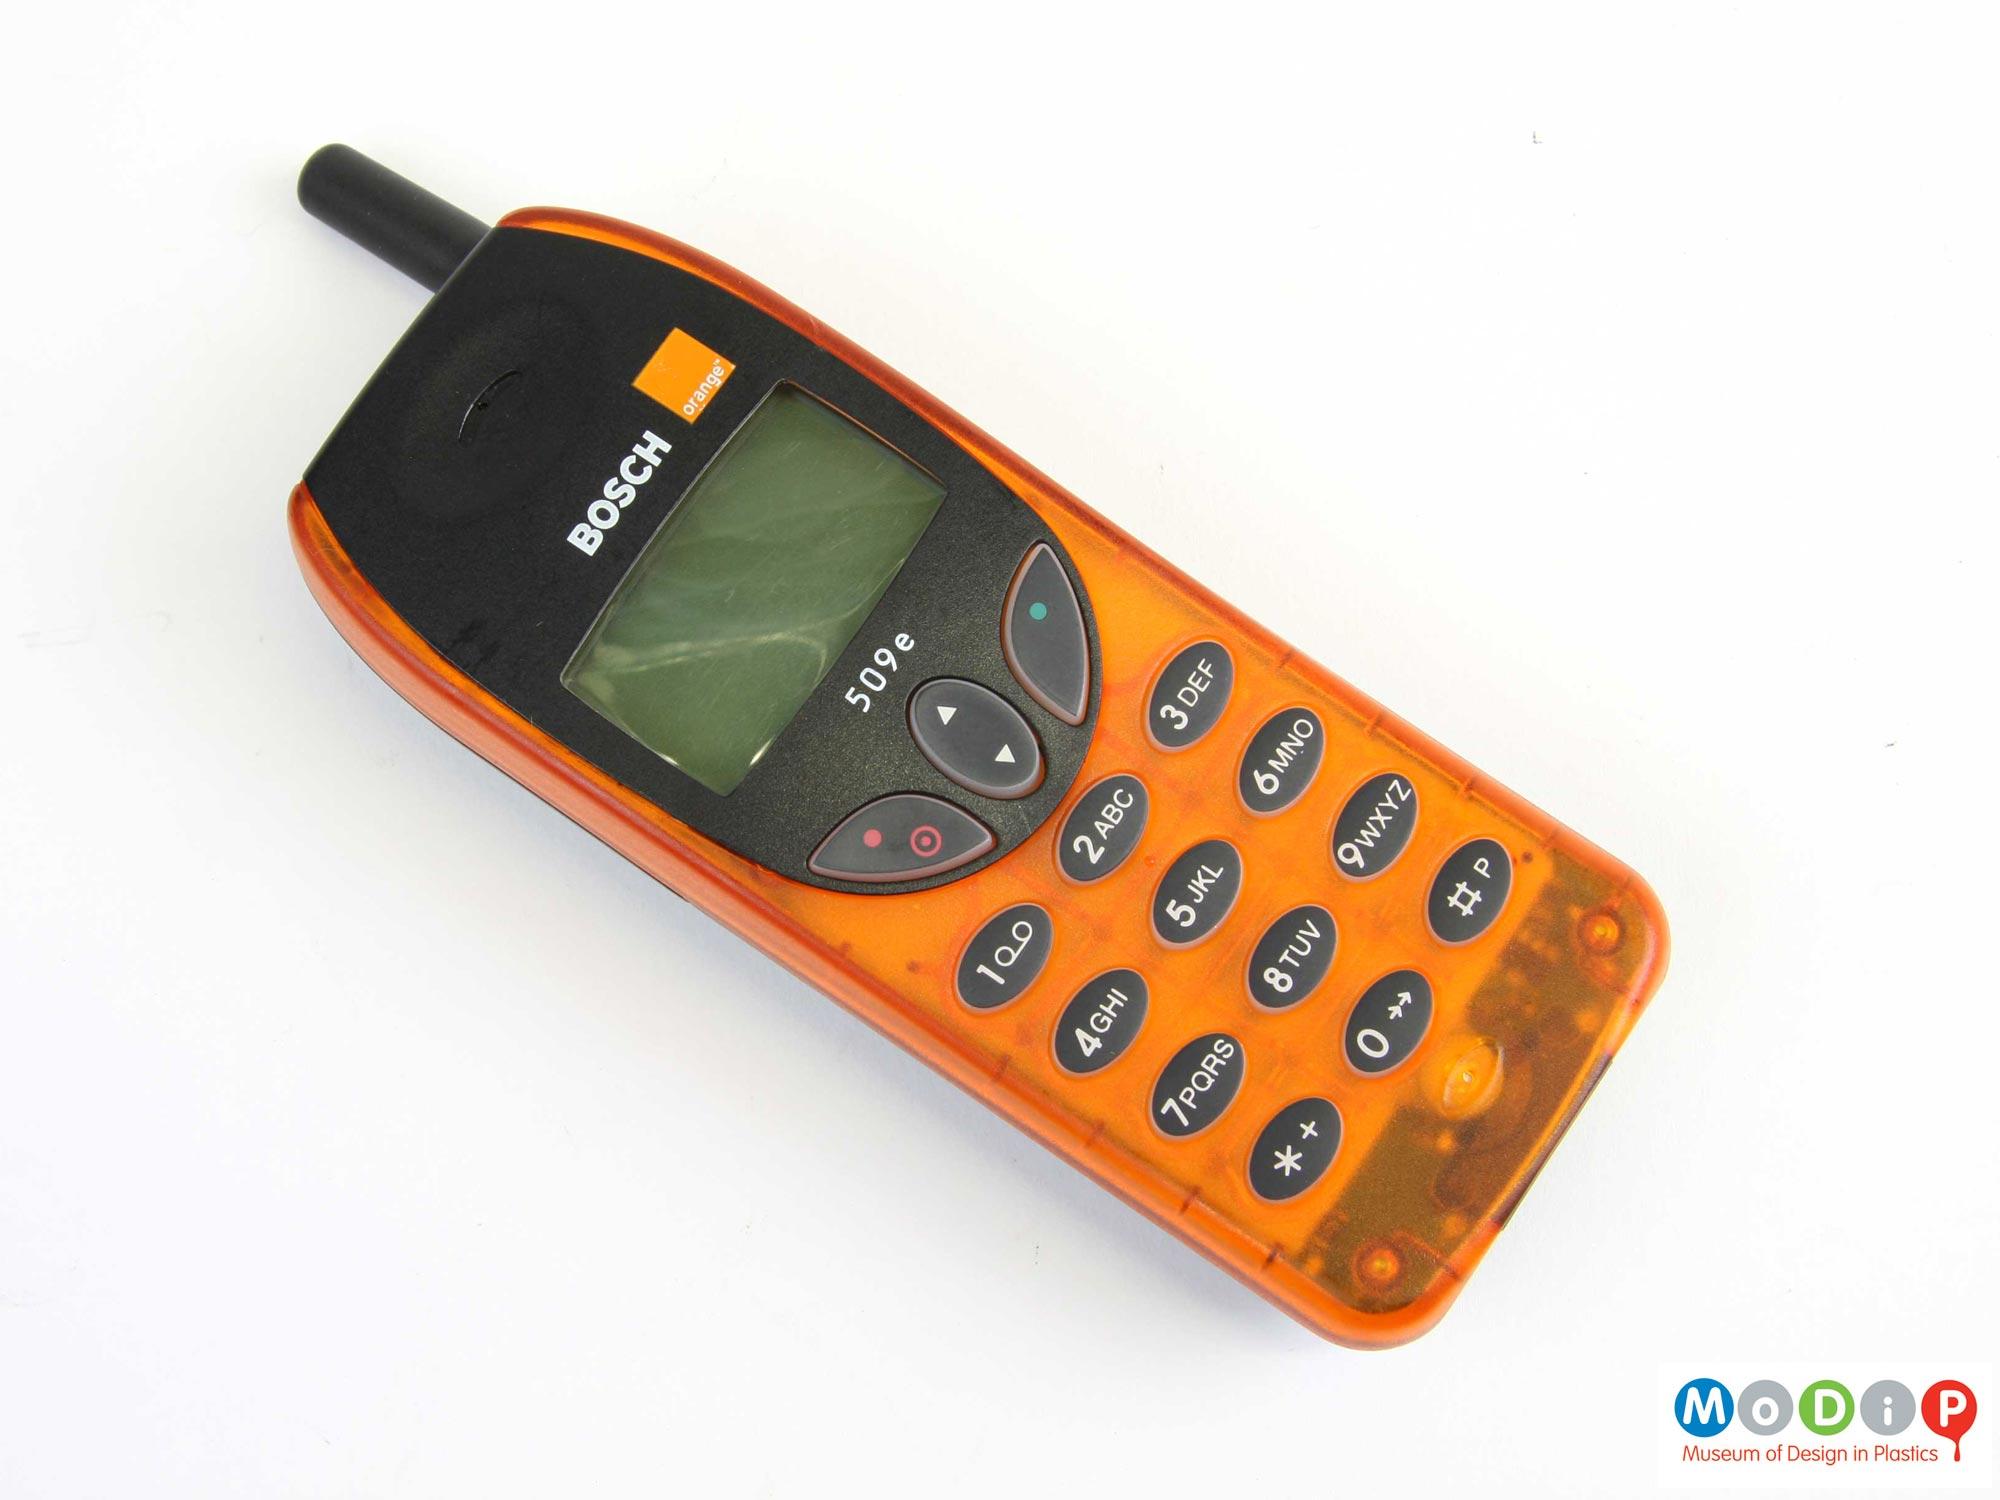 Bosch 509e mobile phone | Museum of Design in Plastics